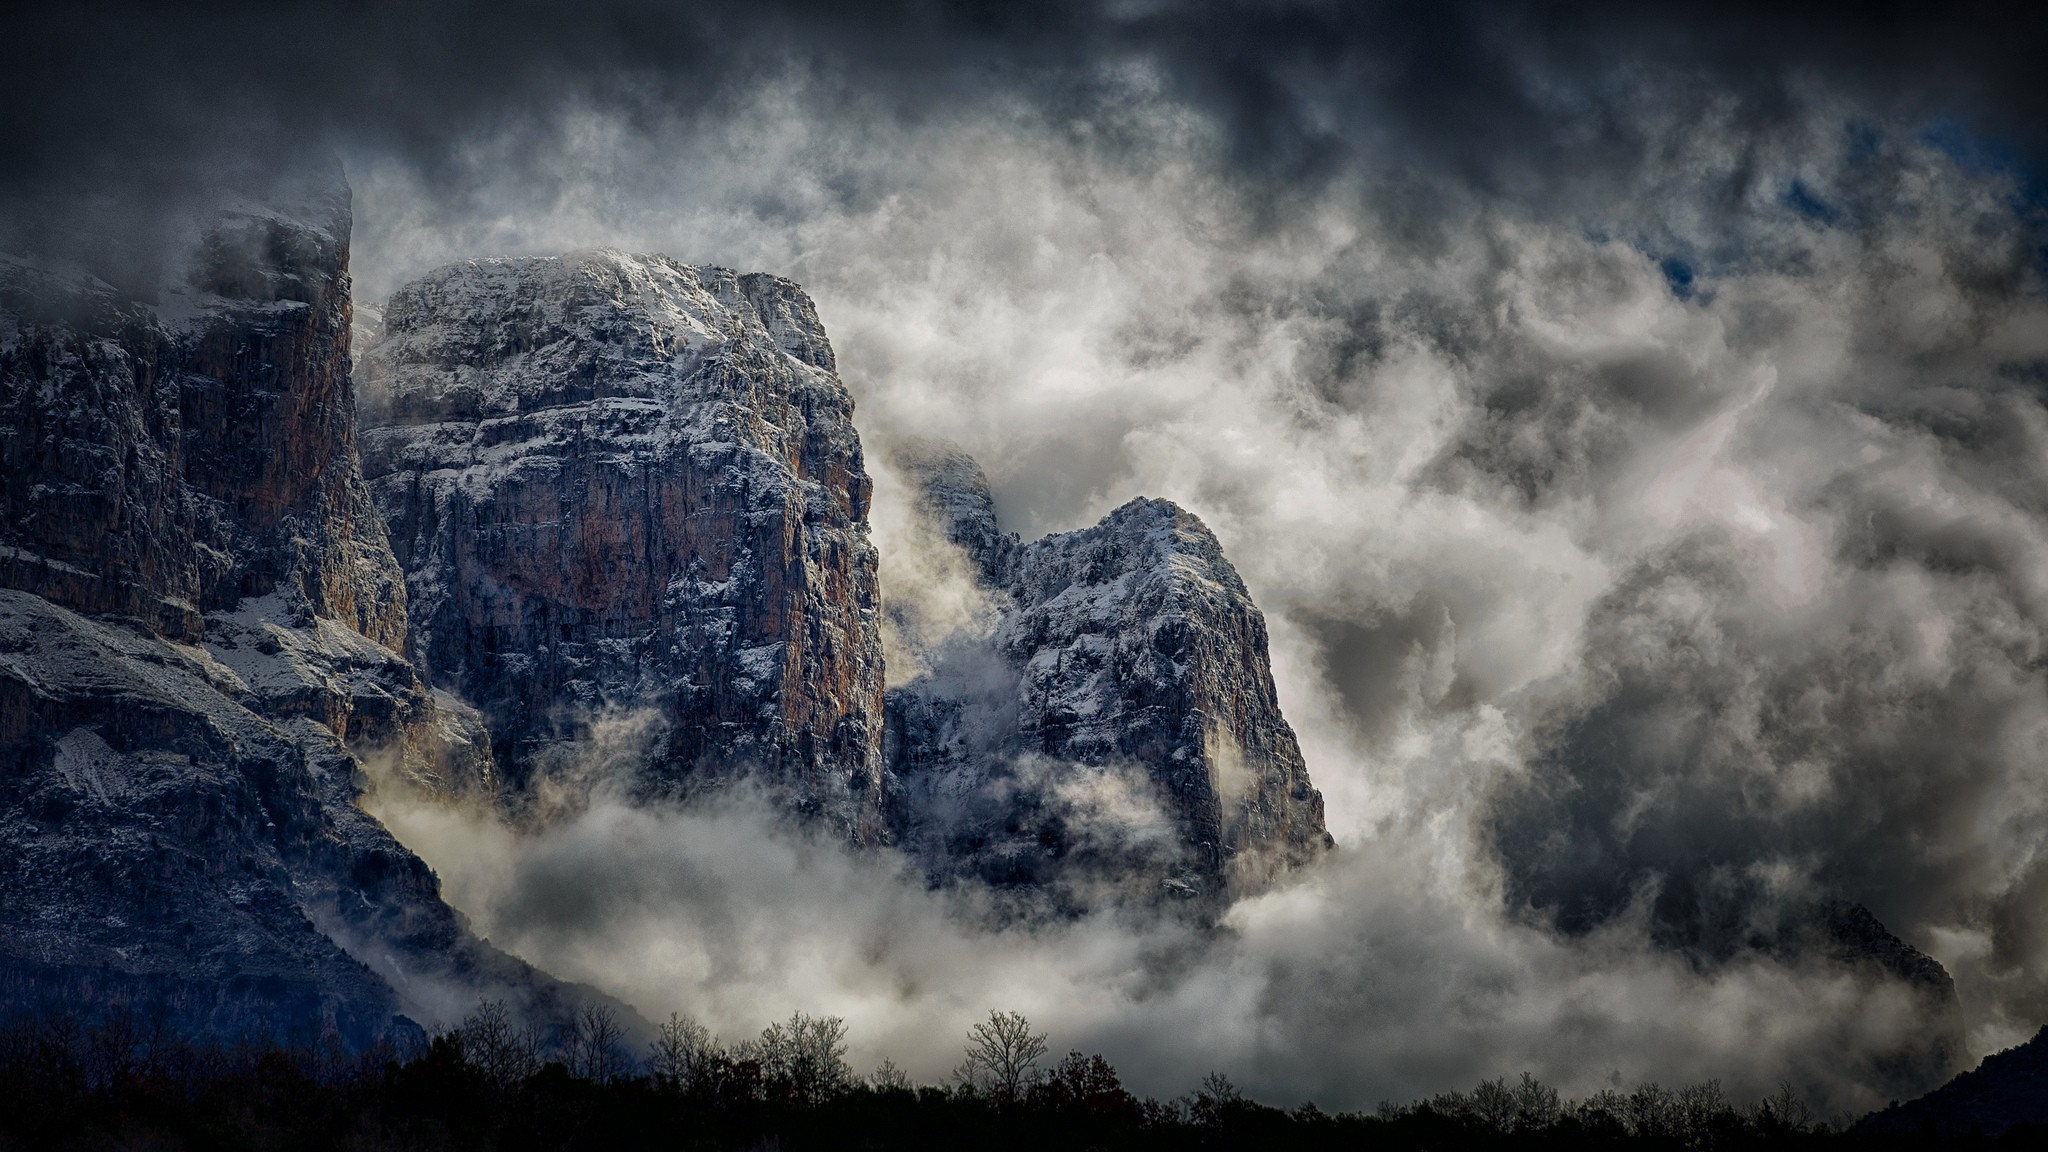 General 2048x1152 nature photography landscape mountains clouds mist snow cliff Greece